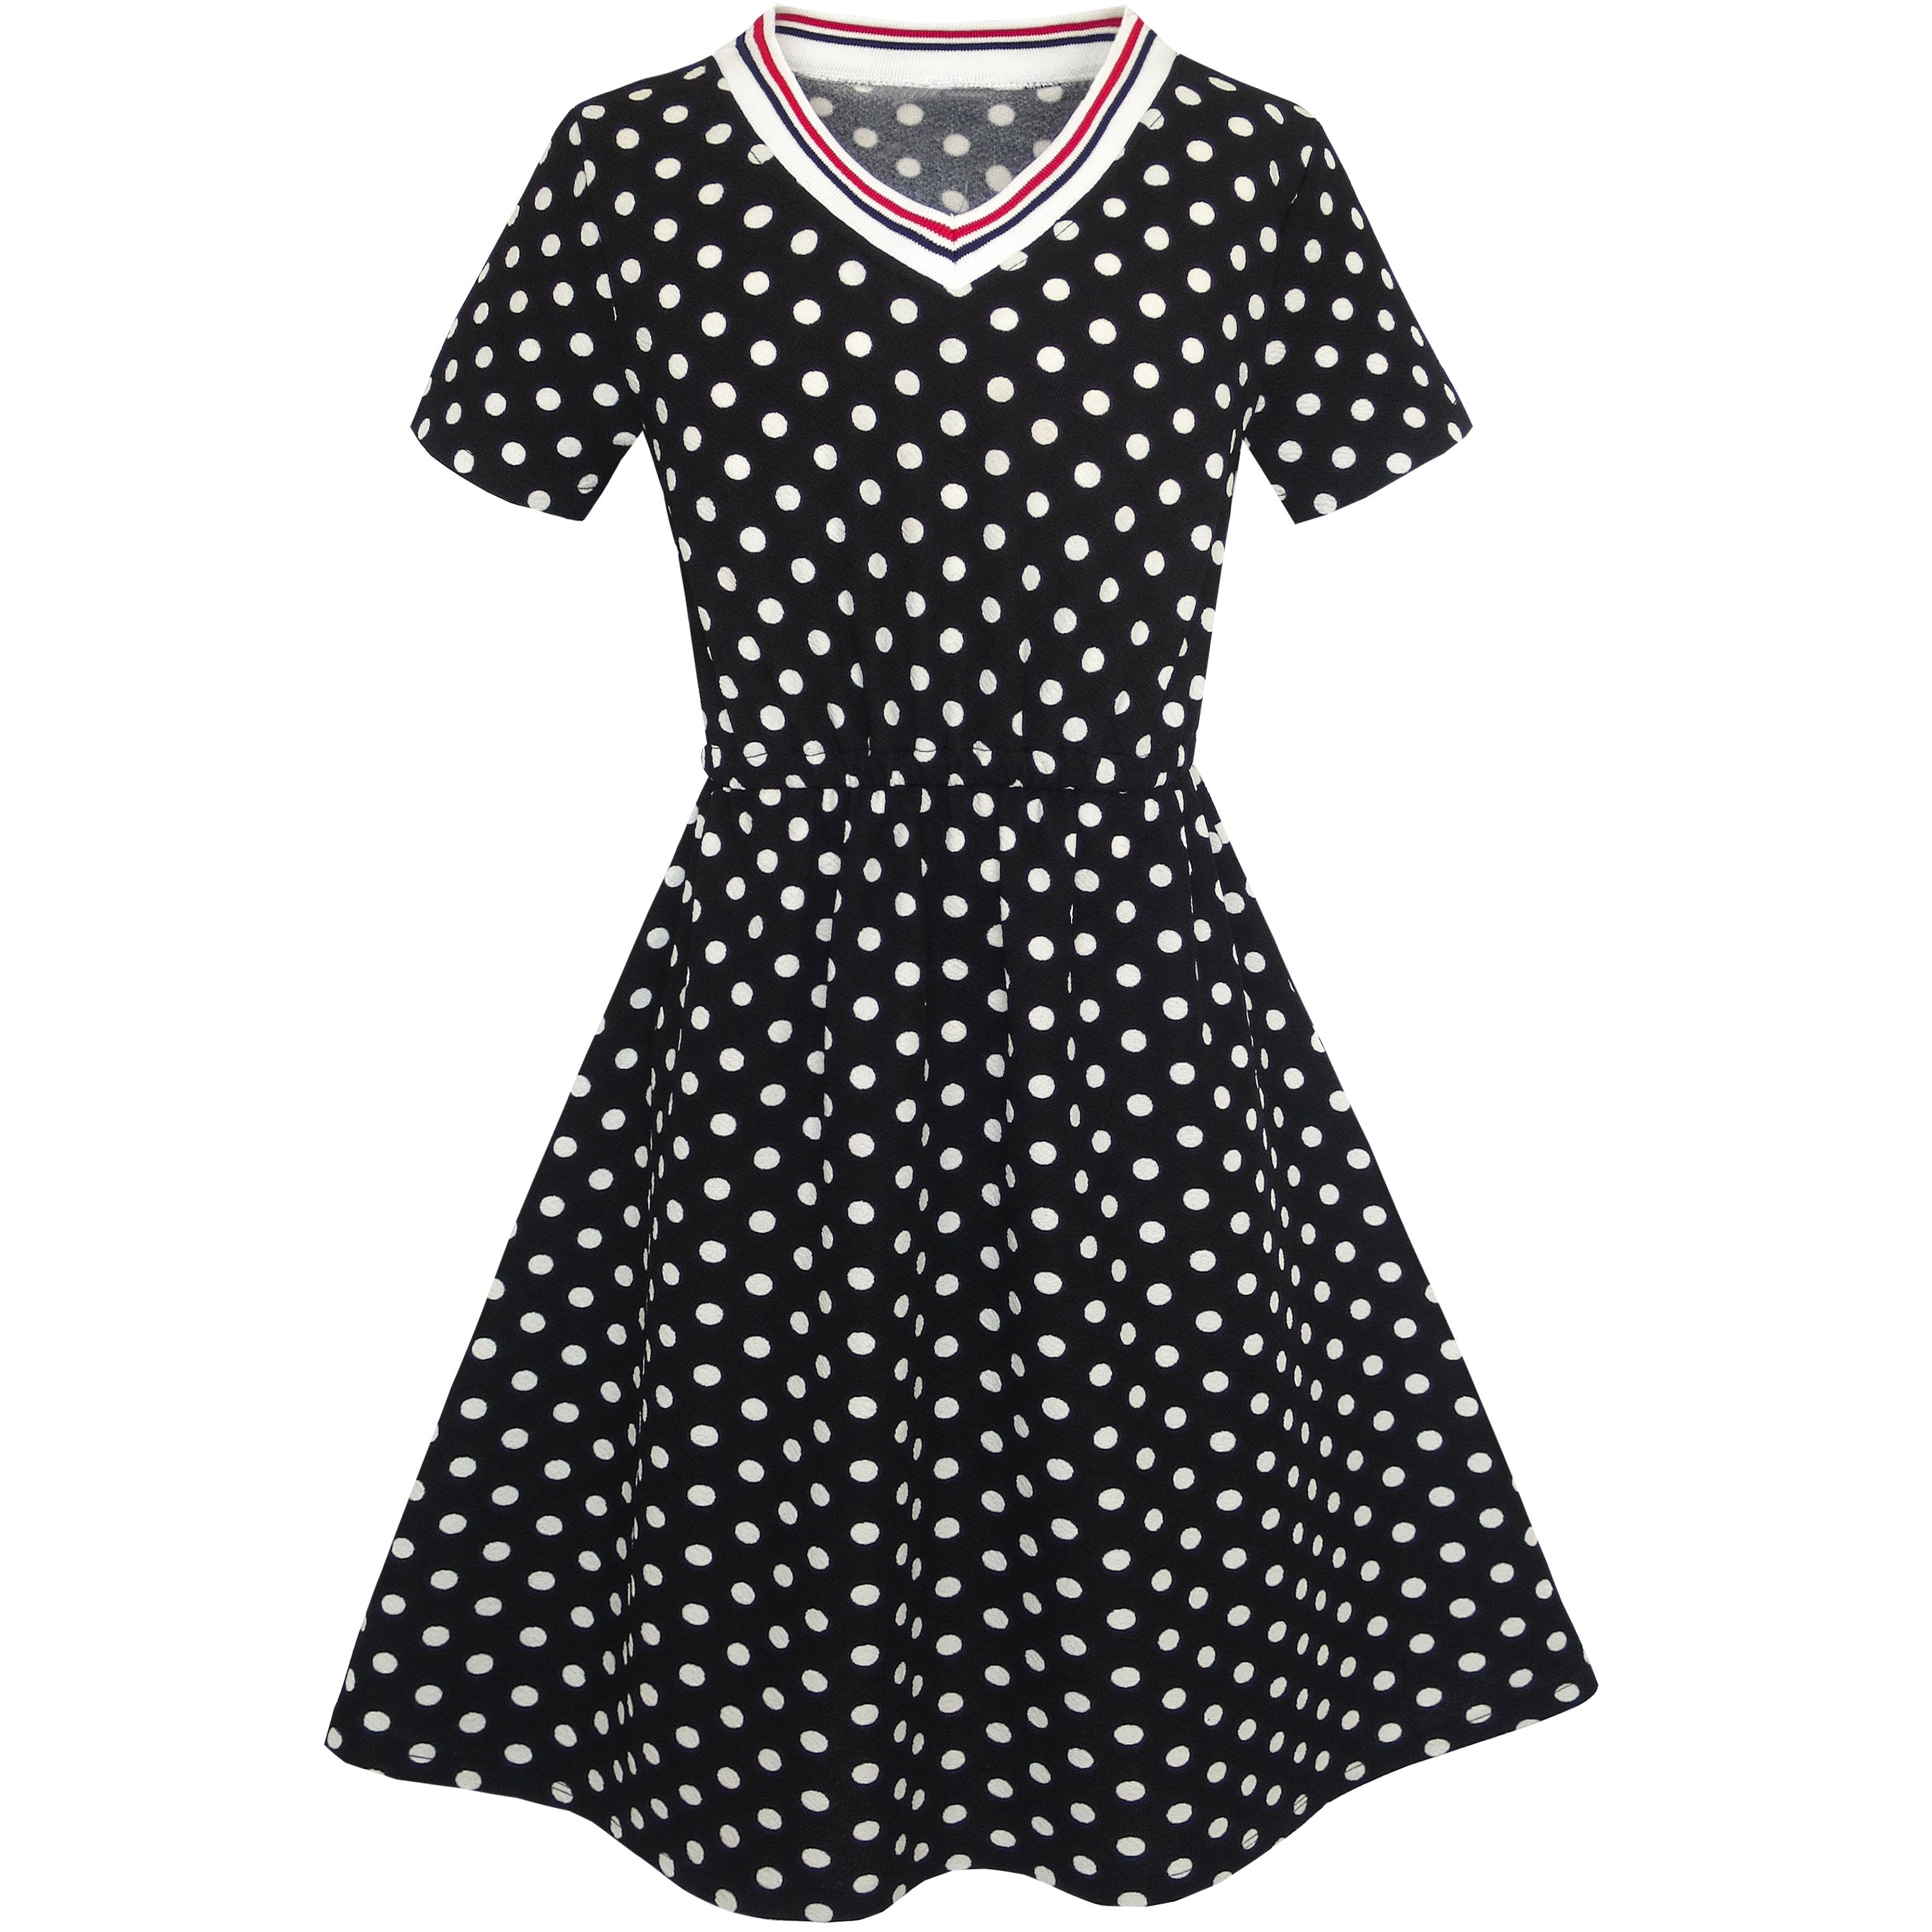 girls black and white polka dot dress